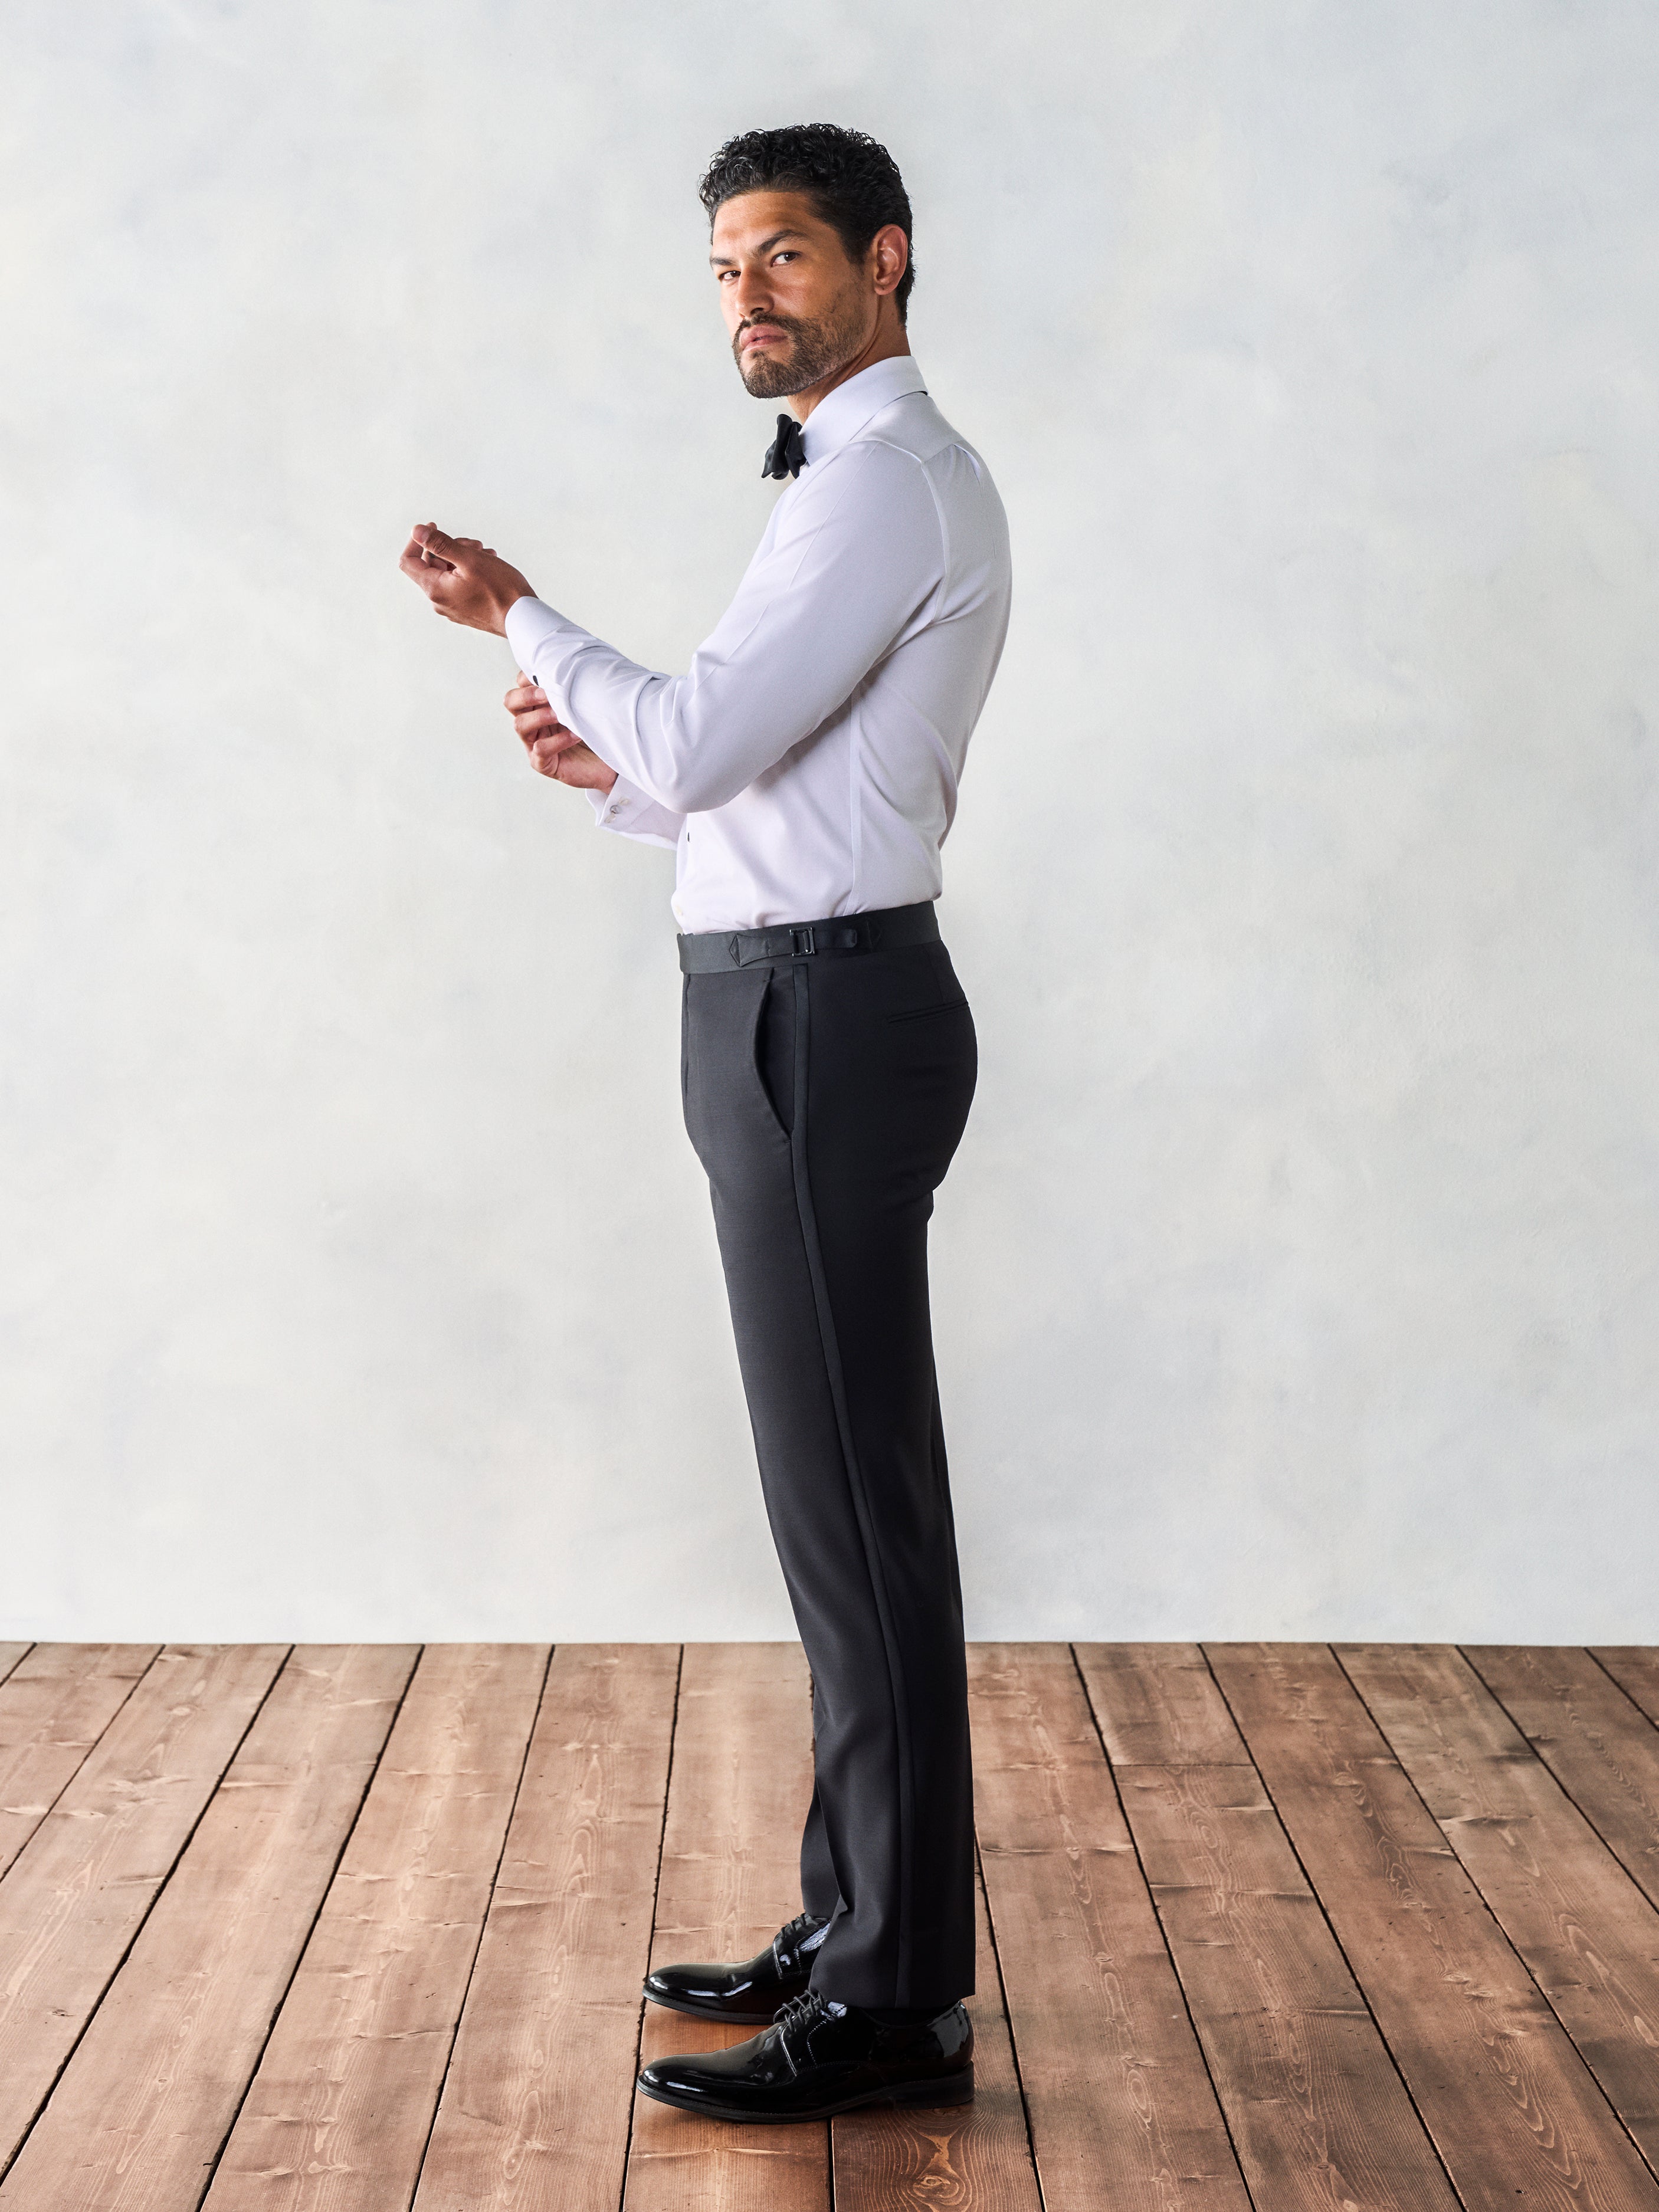 Black Shirt with Grey Pants : A Gentlemen Look To Consider